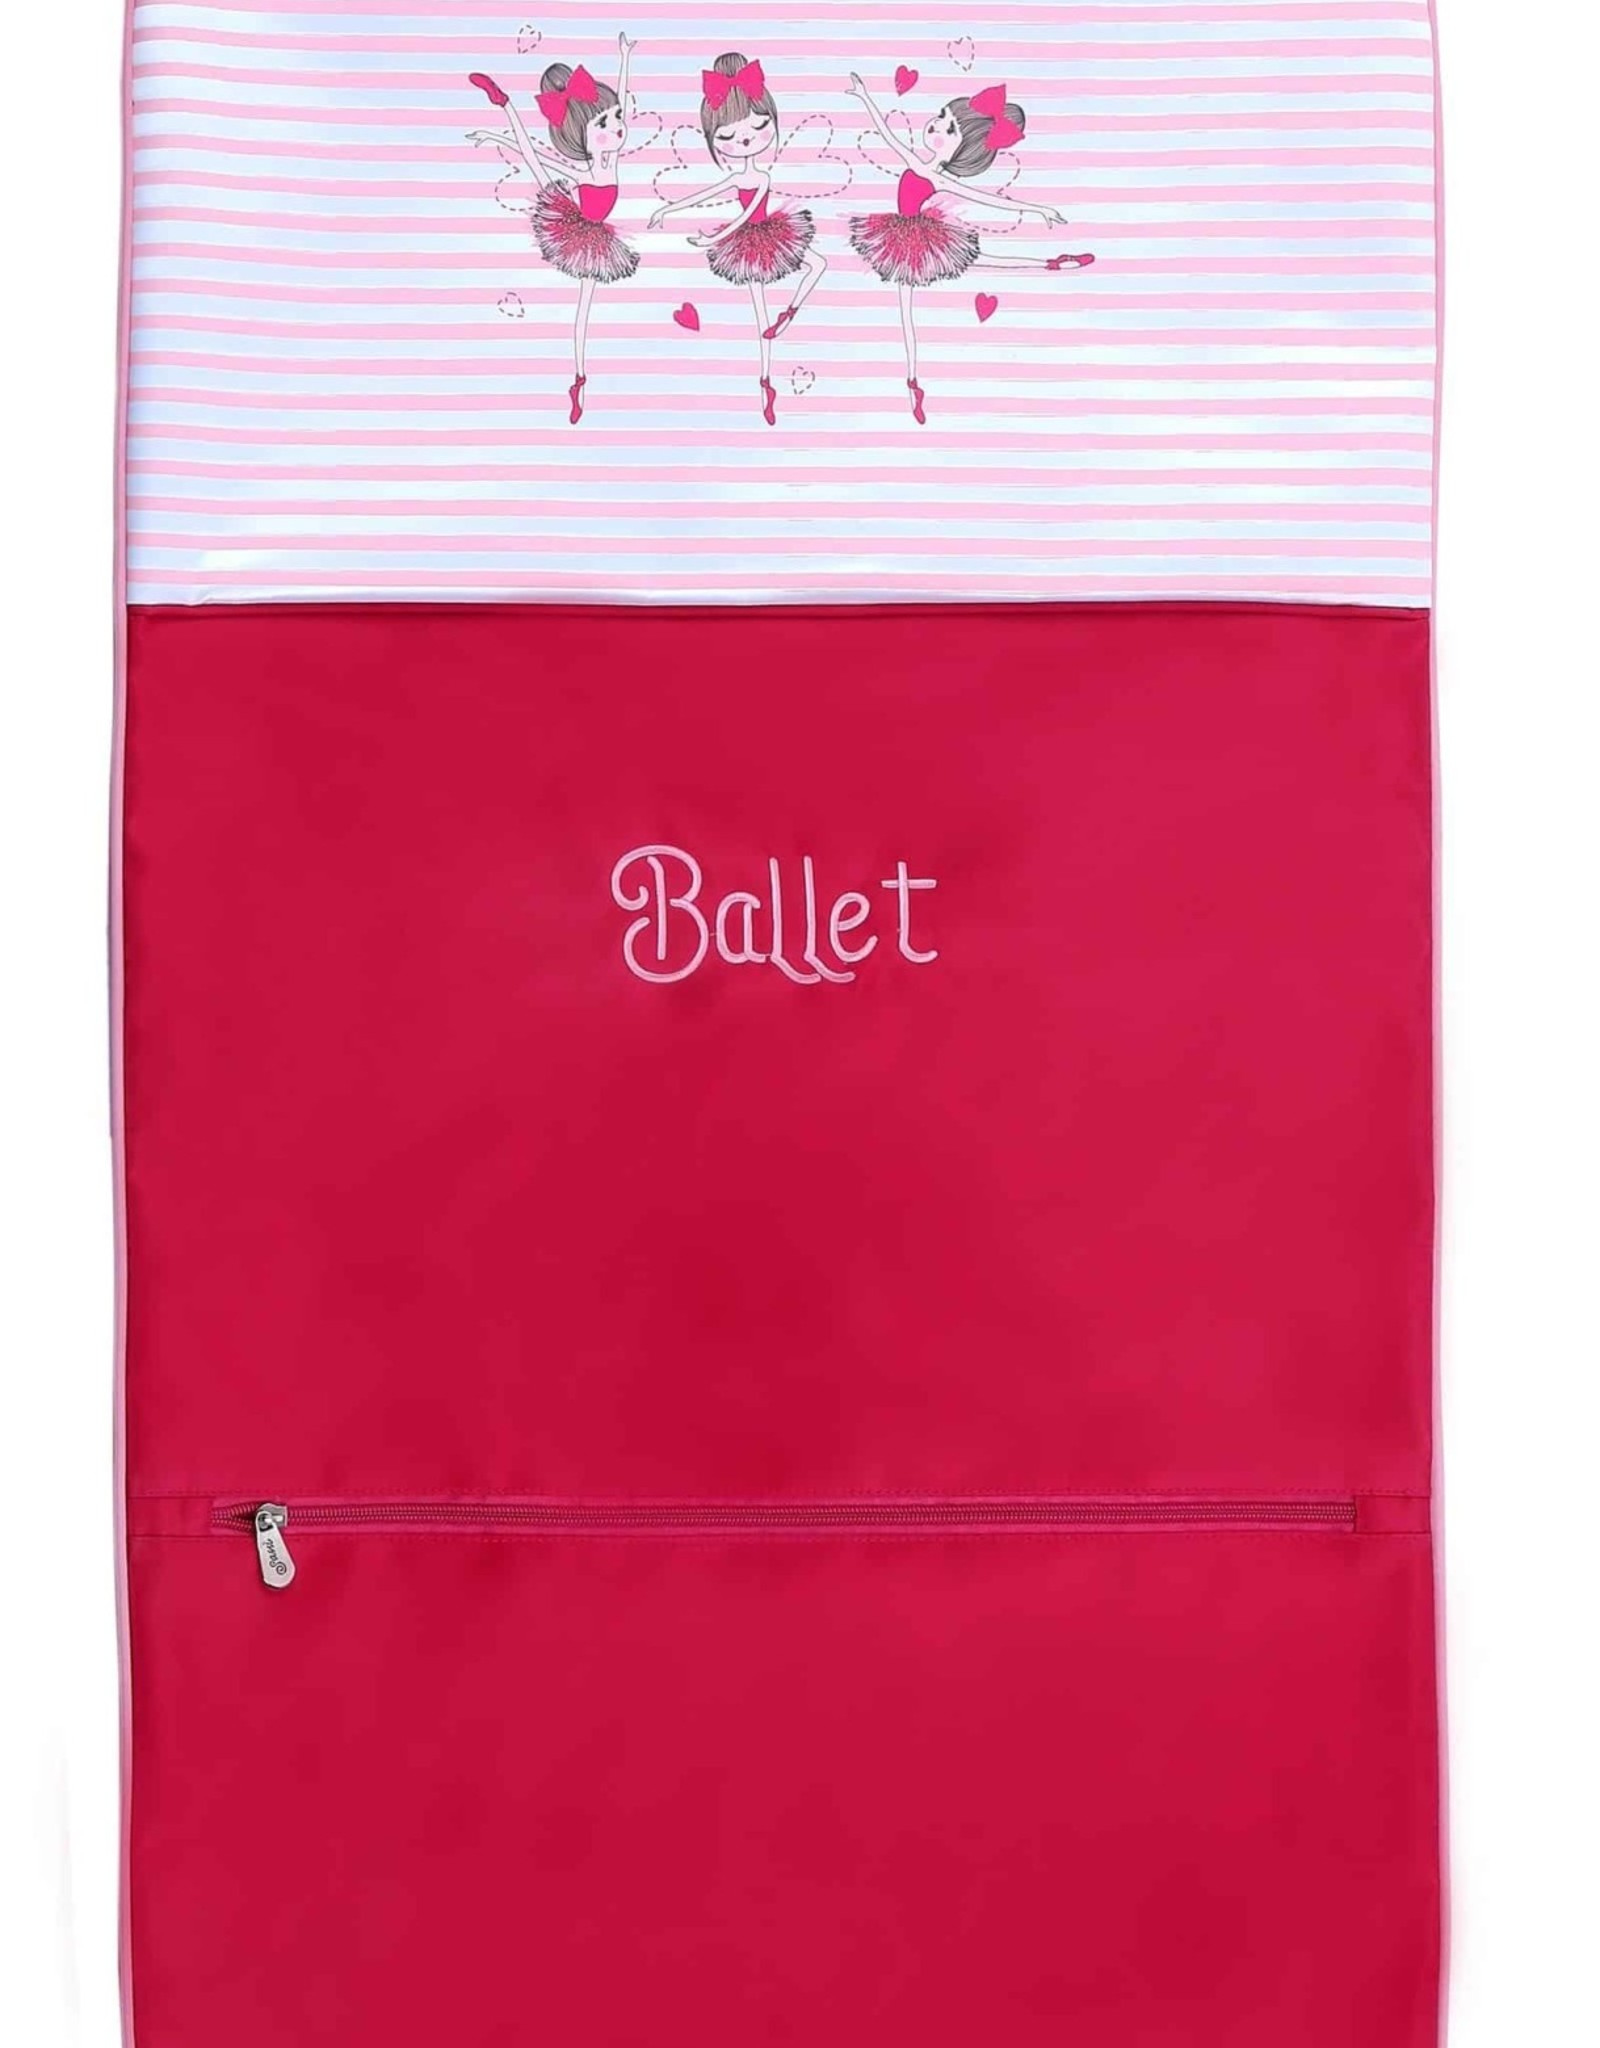 Sassi Designs OPT-04 Ballerinas on Pointe Garment Bag